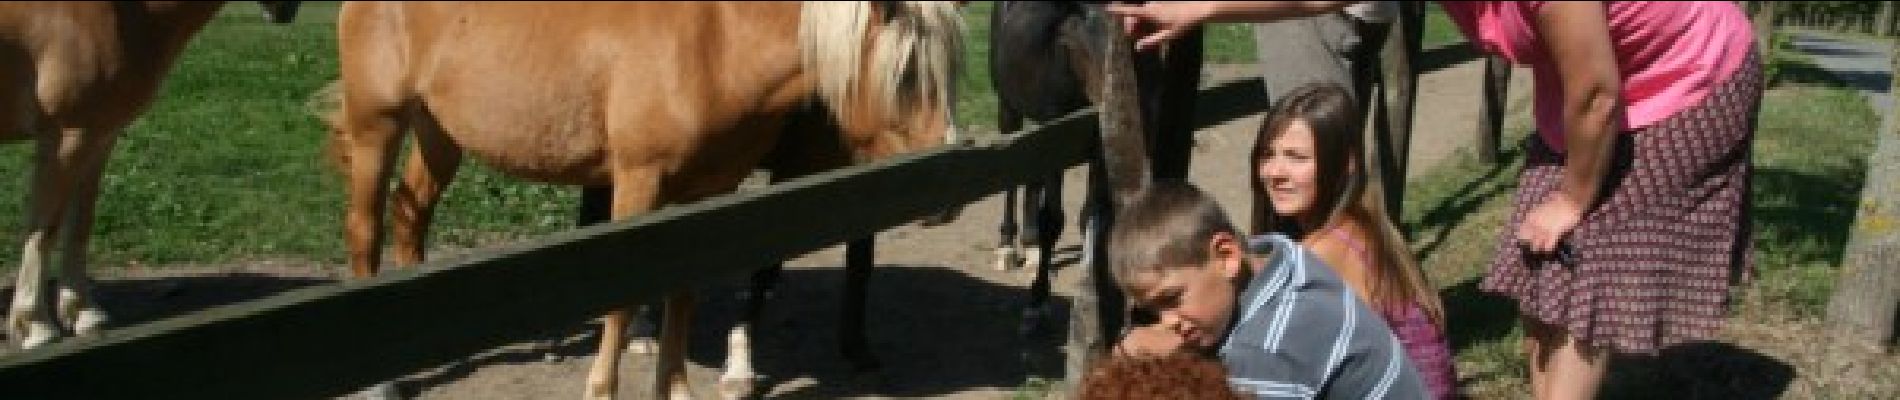 Punto di interesse Beauraing - Comogne horse-milking farm - Photo